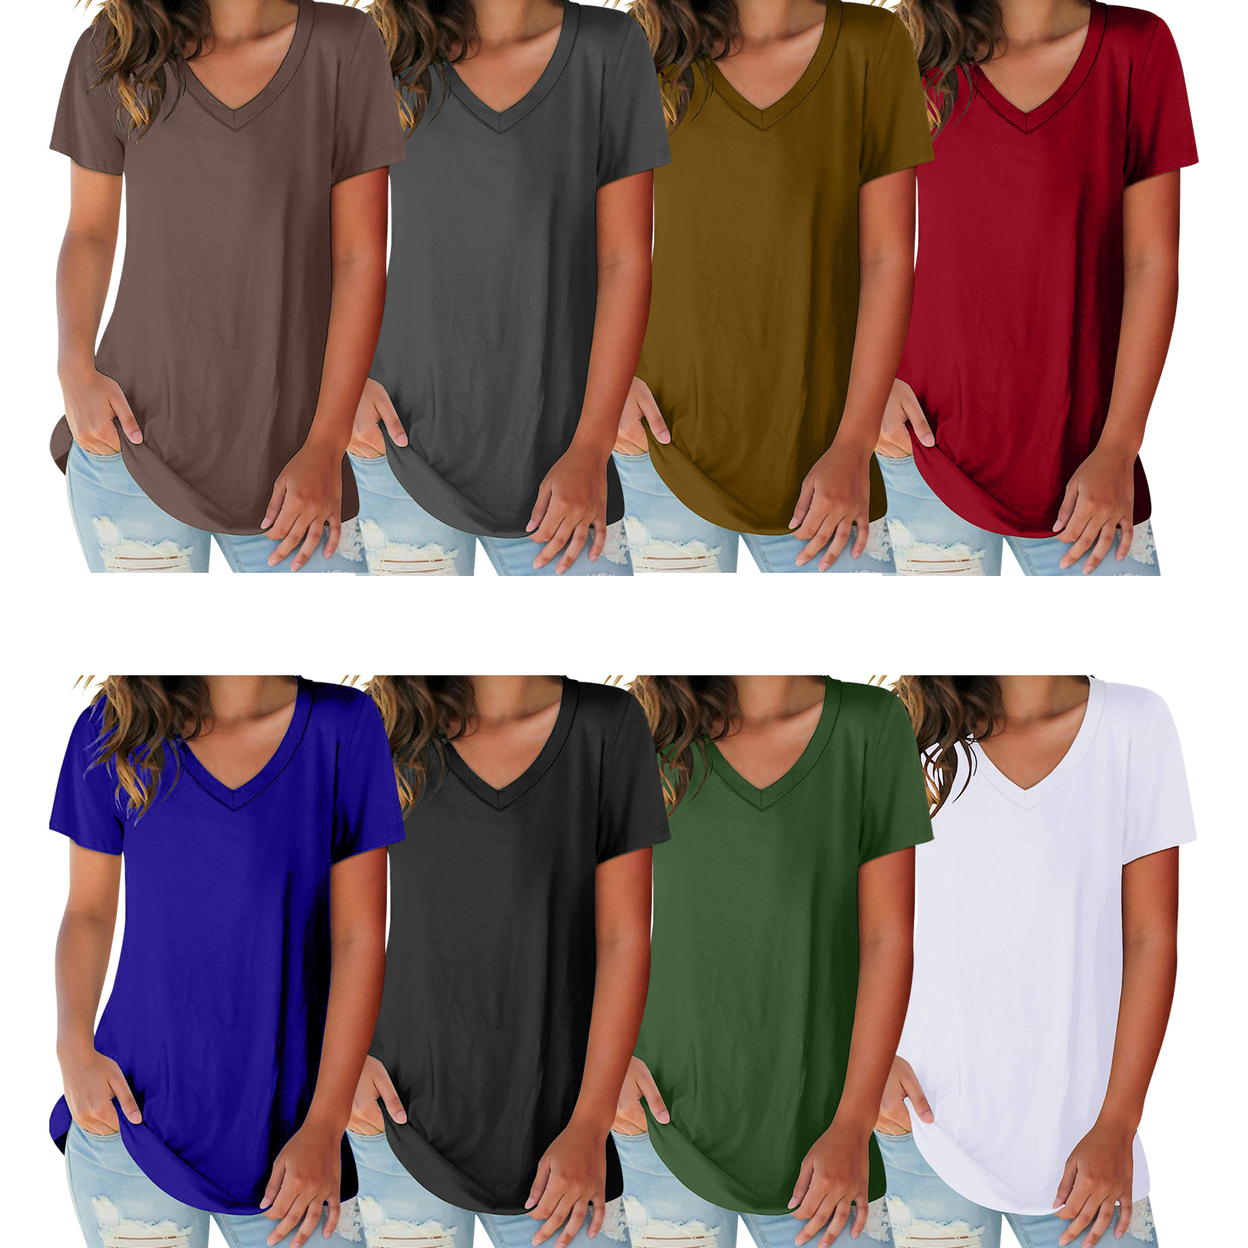 2-Pack: Women's Ultra Soft Smooth Cotton Blend Basic V-Neck Short Sleeve Shirts - Grey & Red, Xx-large